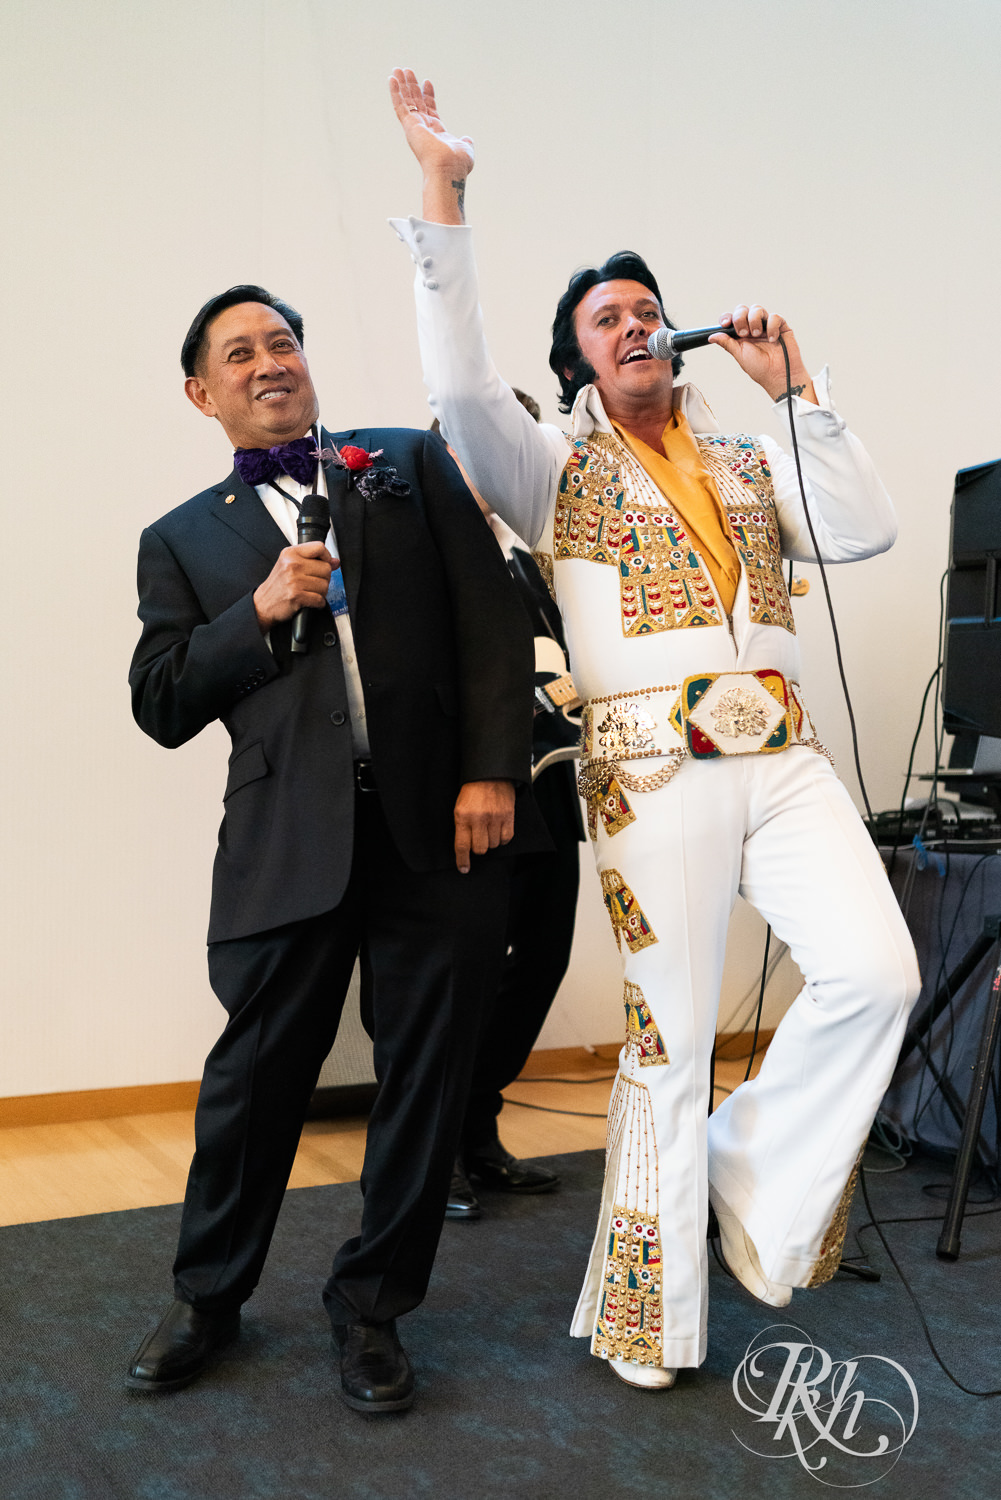 Elvis impersonator sings during wedding reception at the American Swedish Institute in Minneapolis, Minnesota.